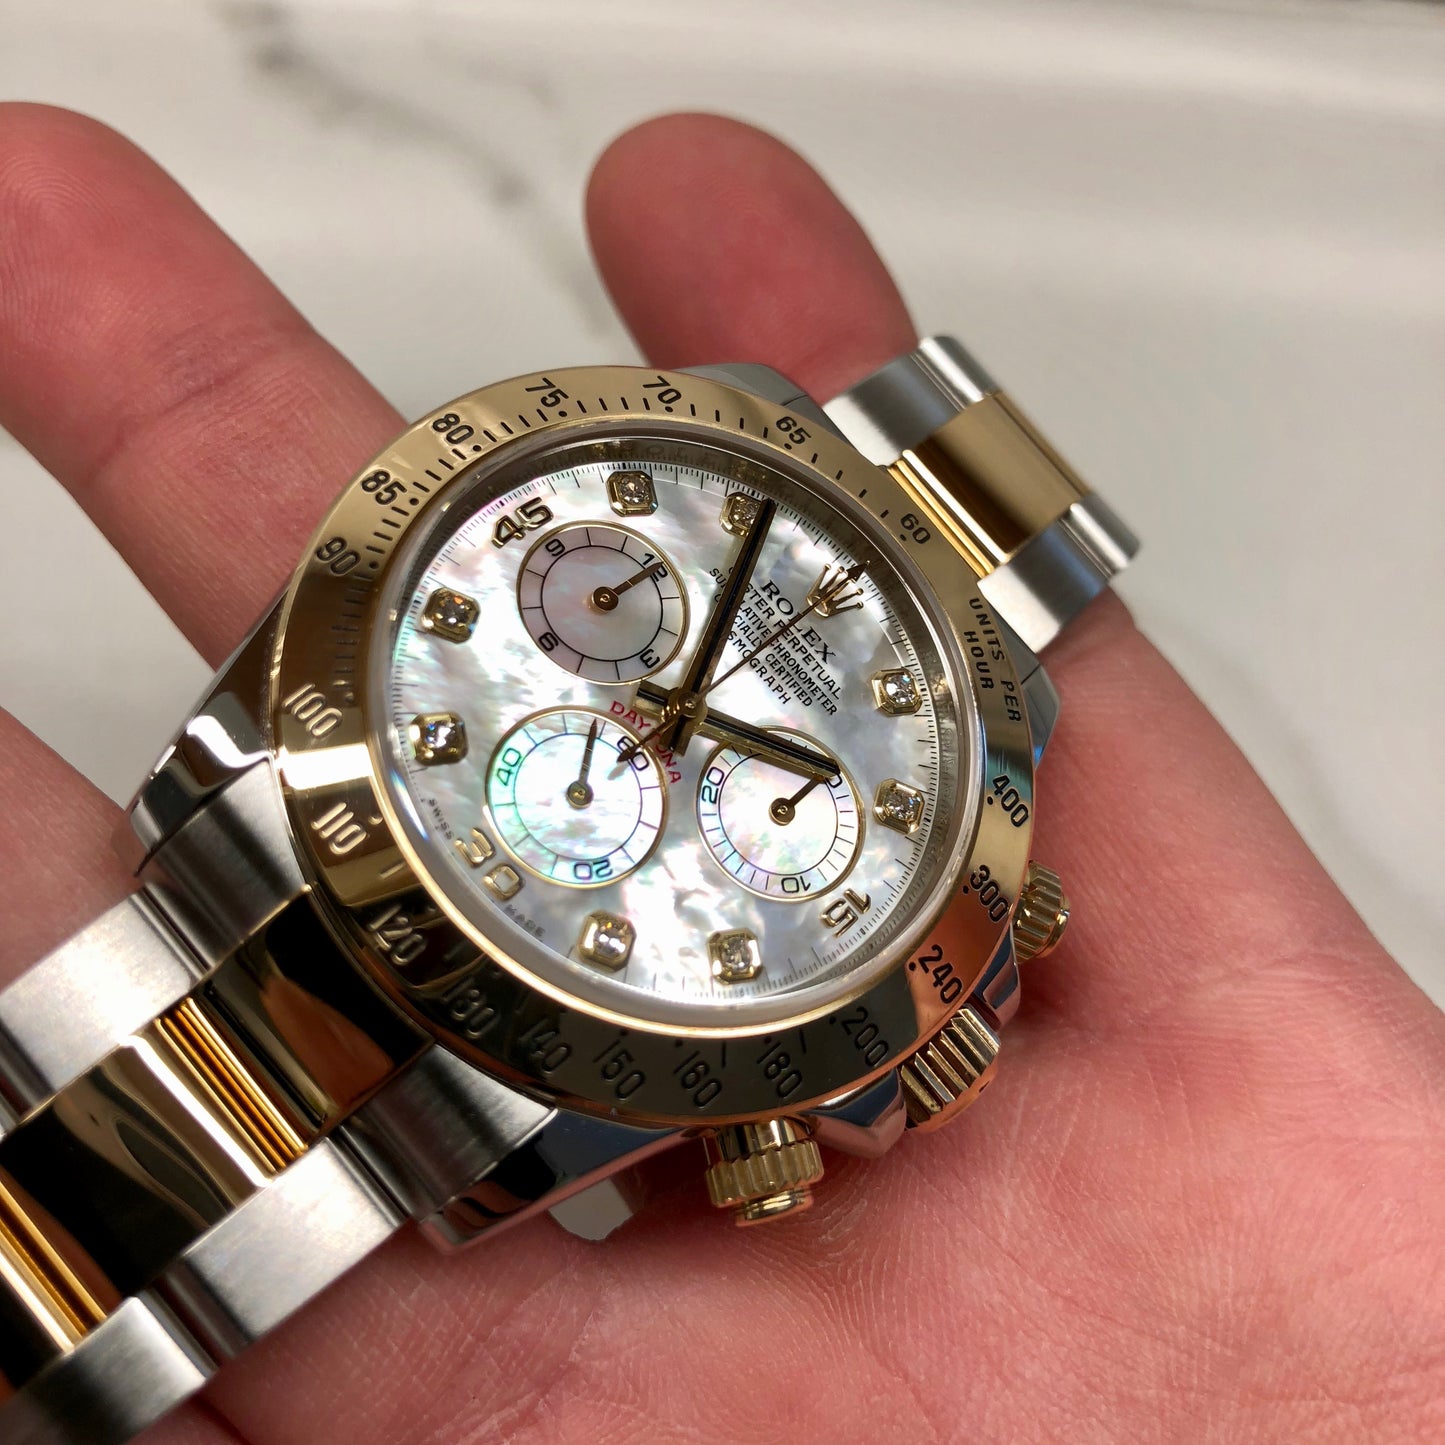 Rolex Daytona 116523 MOP Diamond Two Tone Steel Gold Automatic Caliber 4130 Wristwatch - Hashtag Watch Company